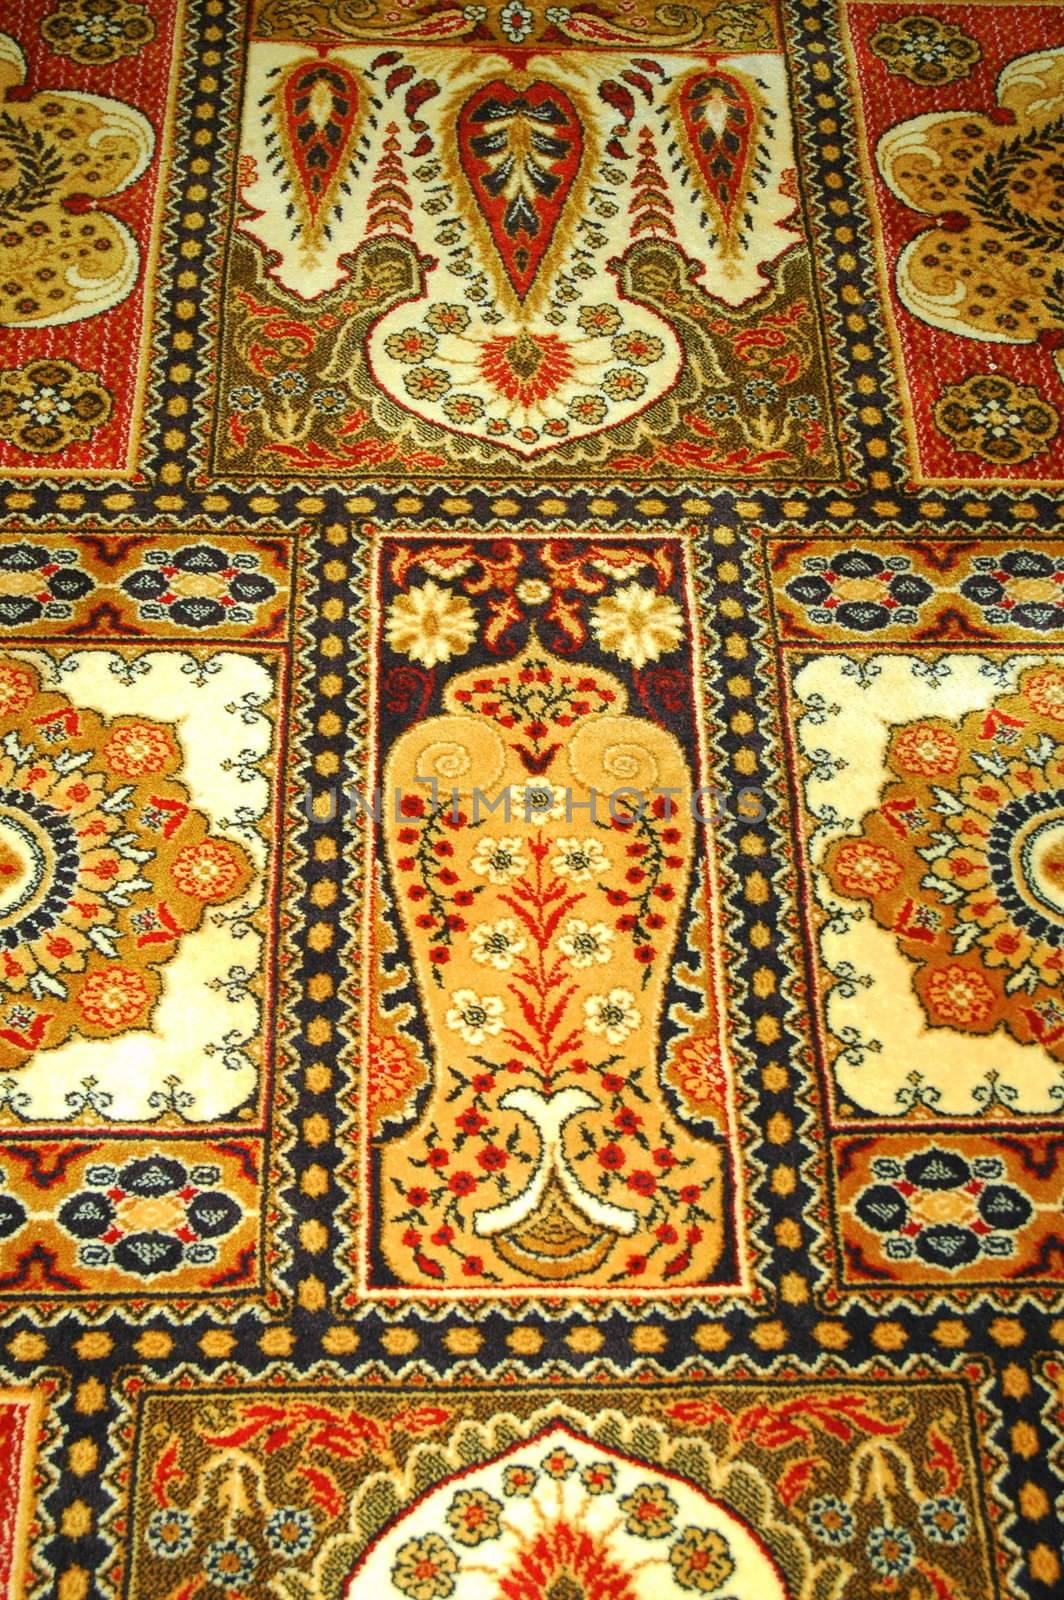 Persian Carpet. by oscarcwilliams